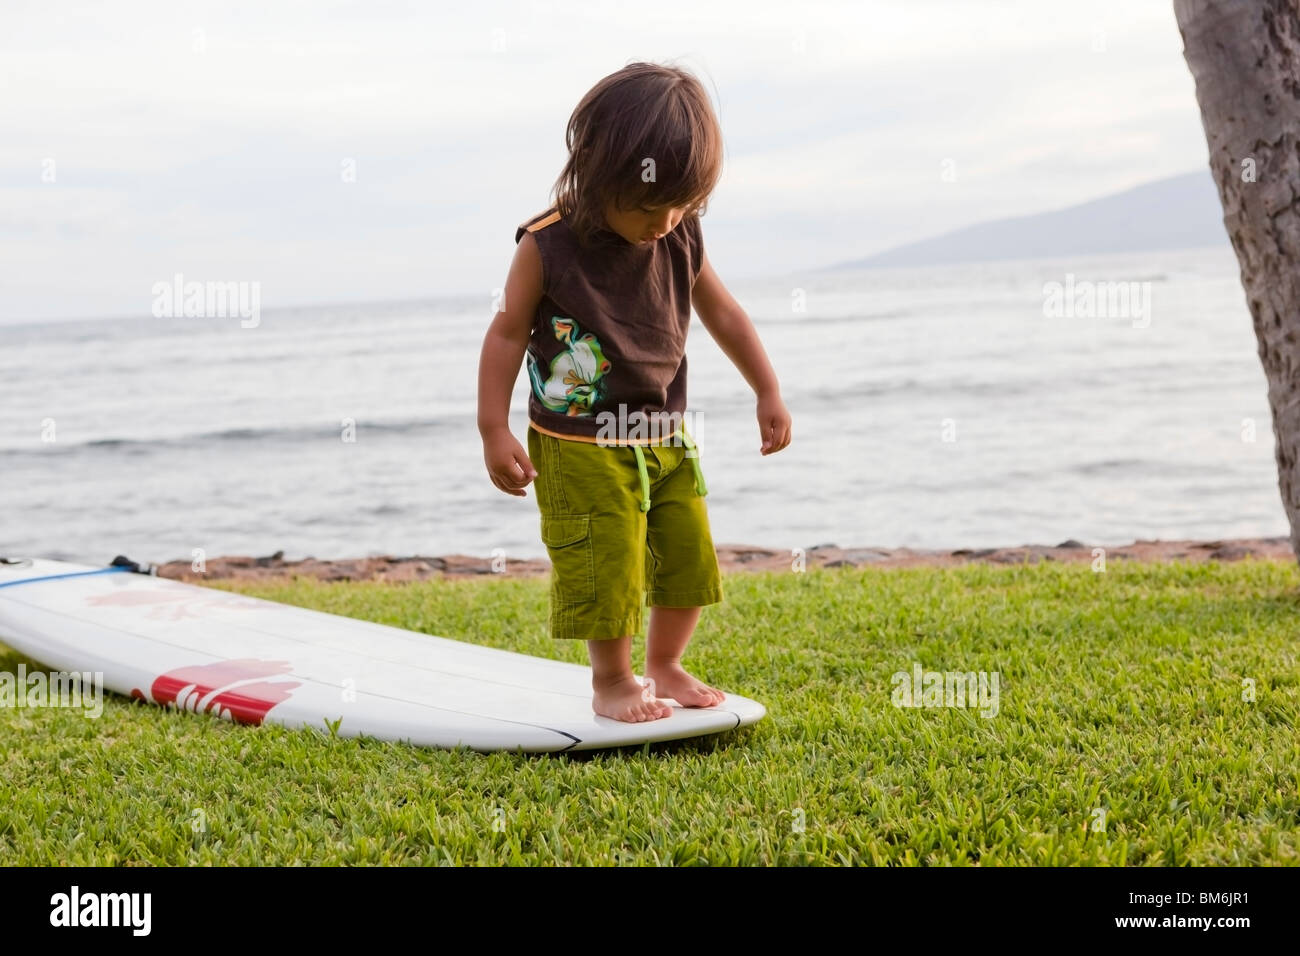 young boy ,hang ten surfboard Stock Photo - Alamy